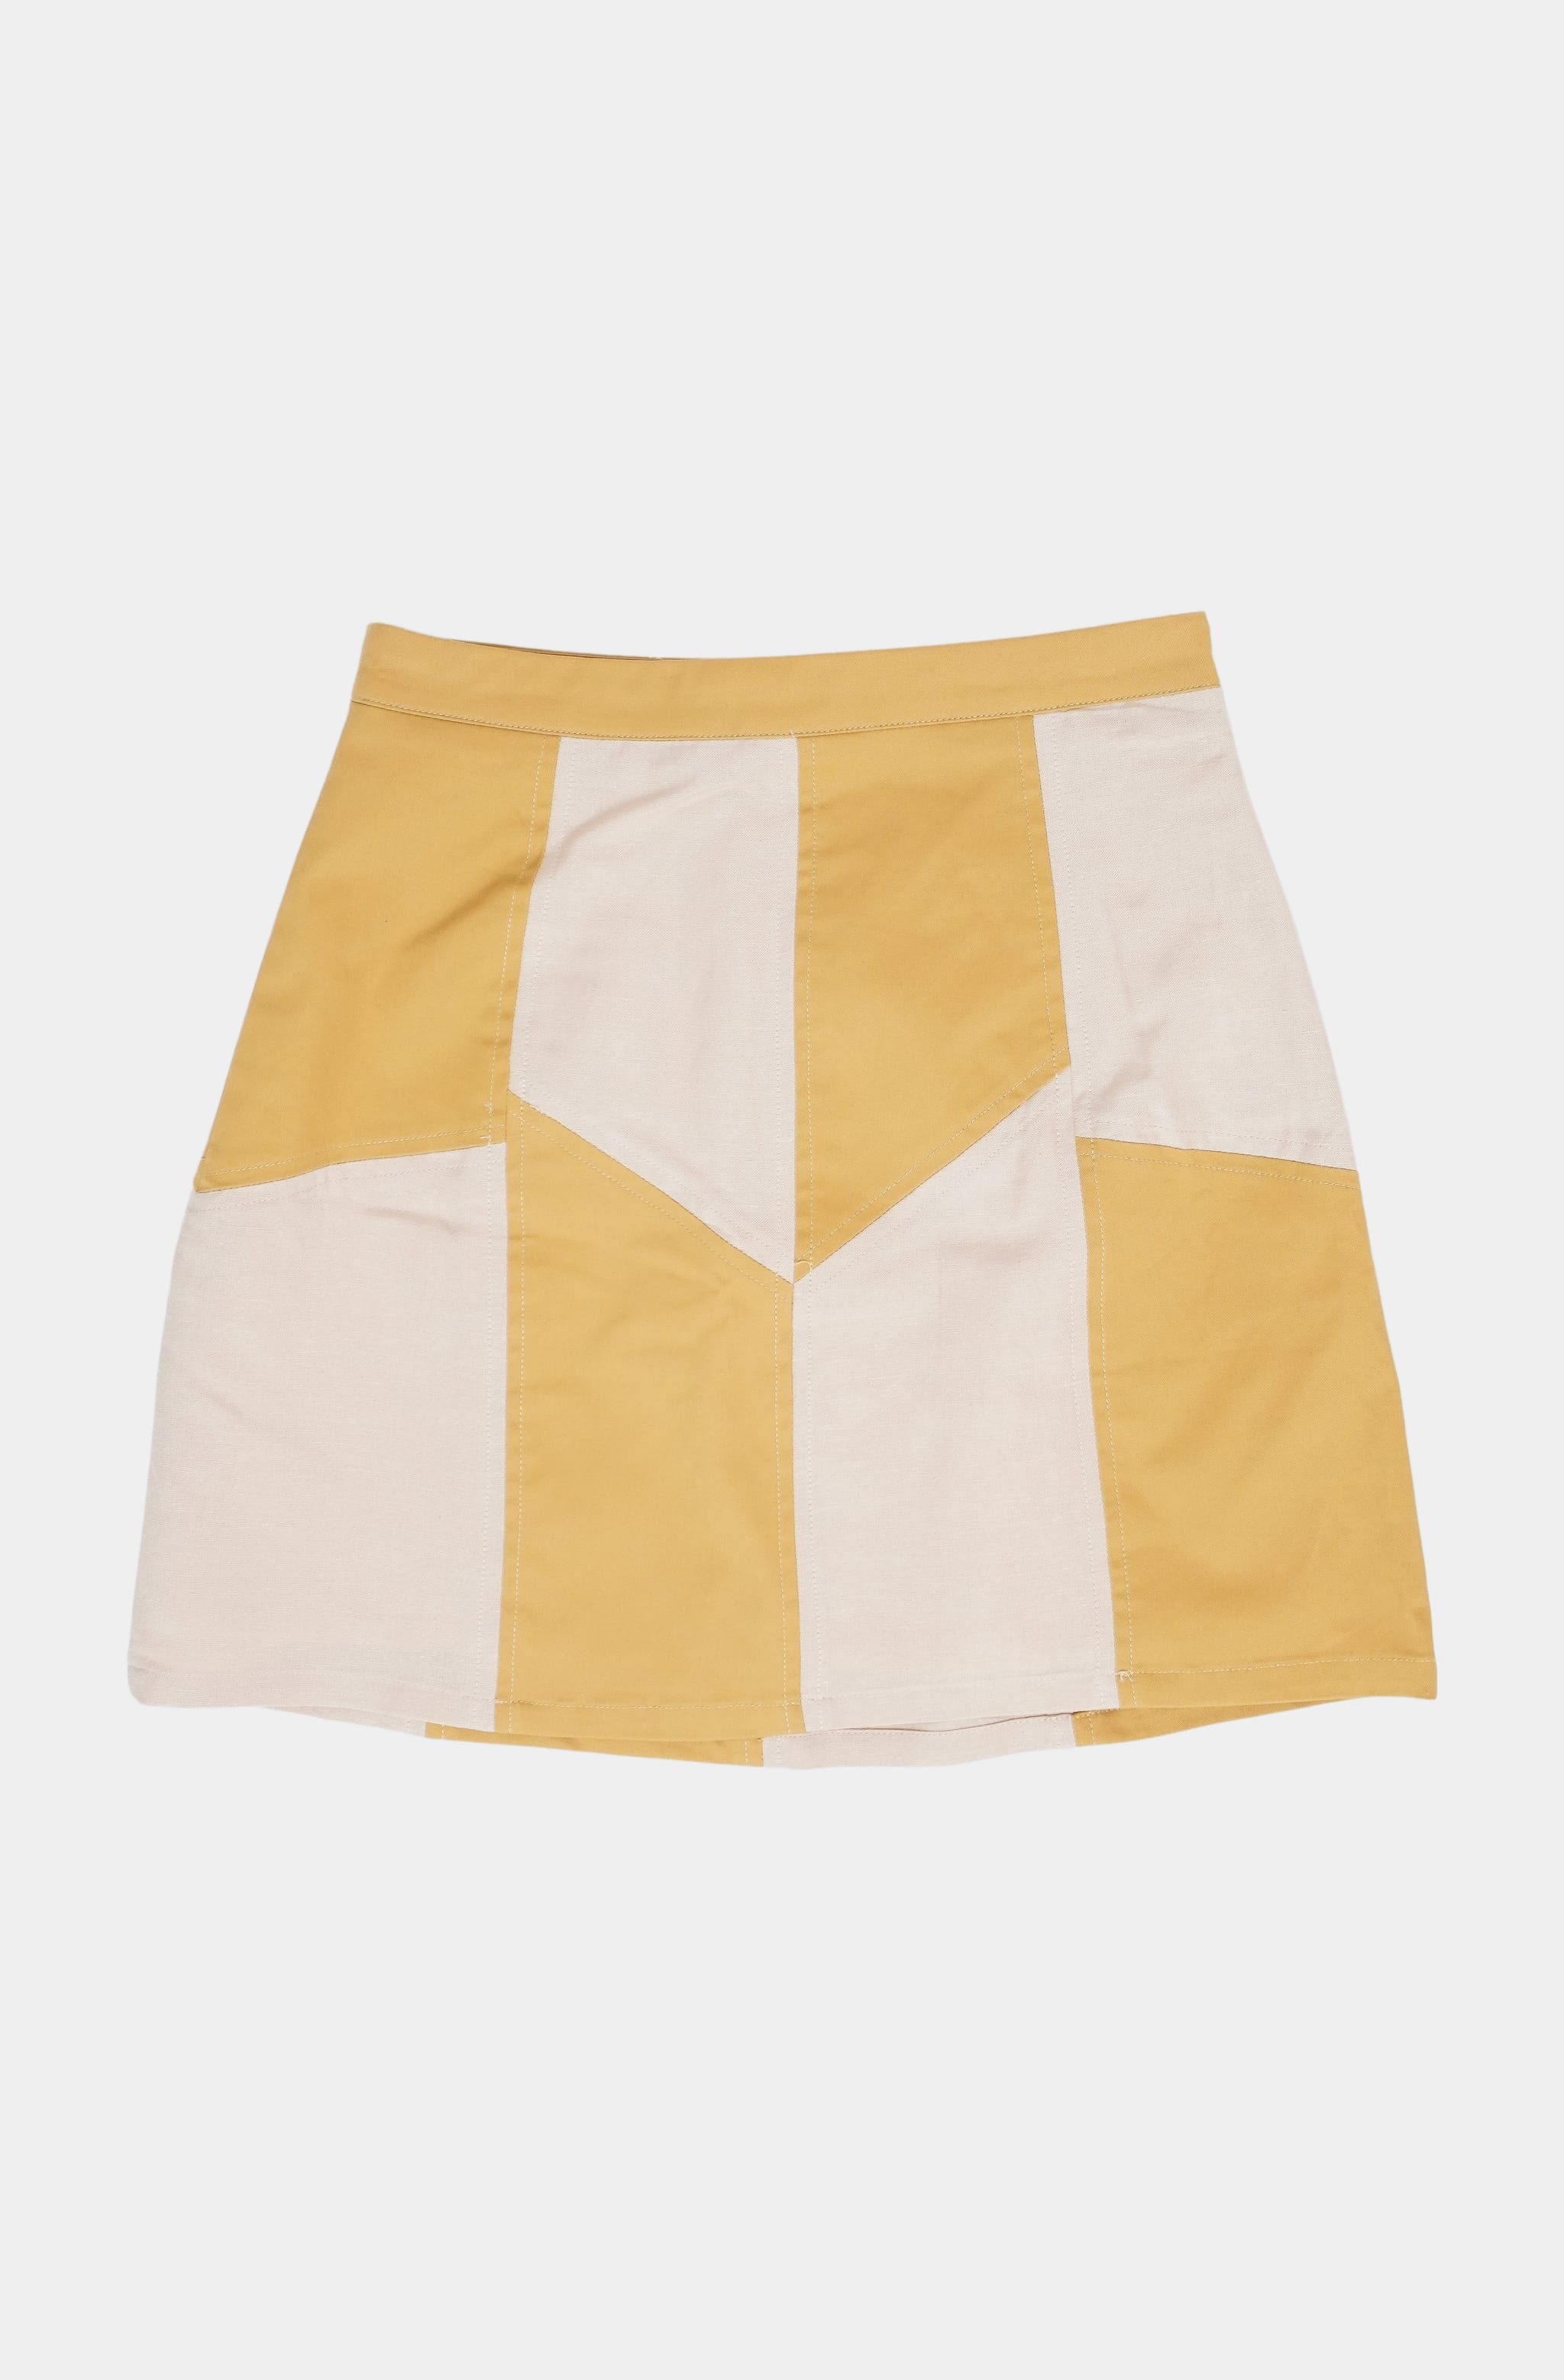 La Creme Mini Skirt